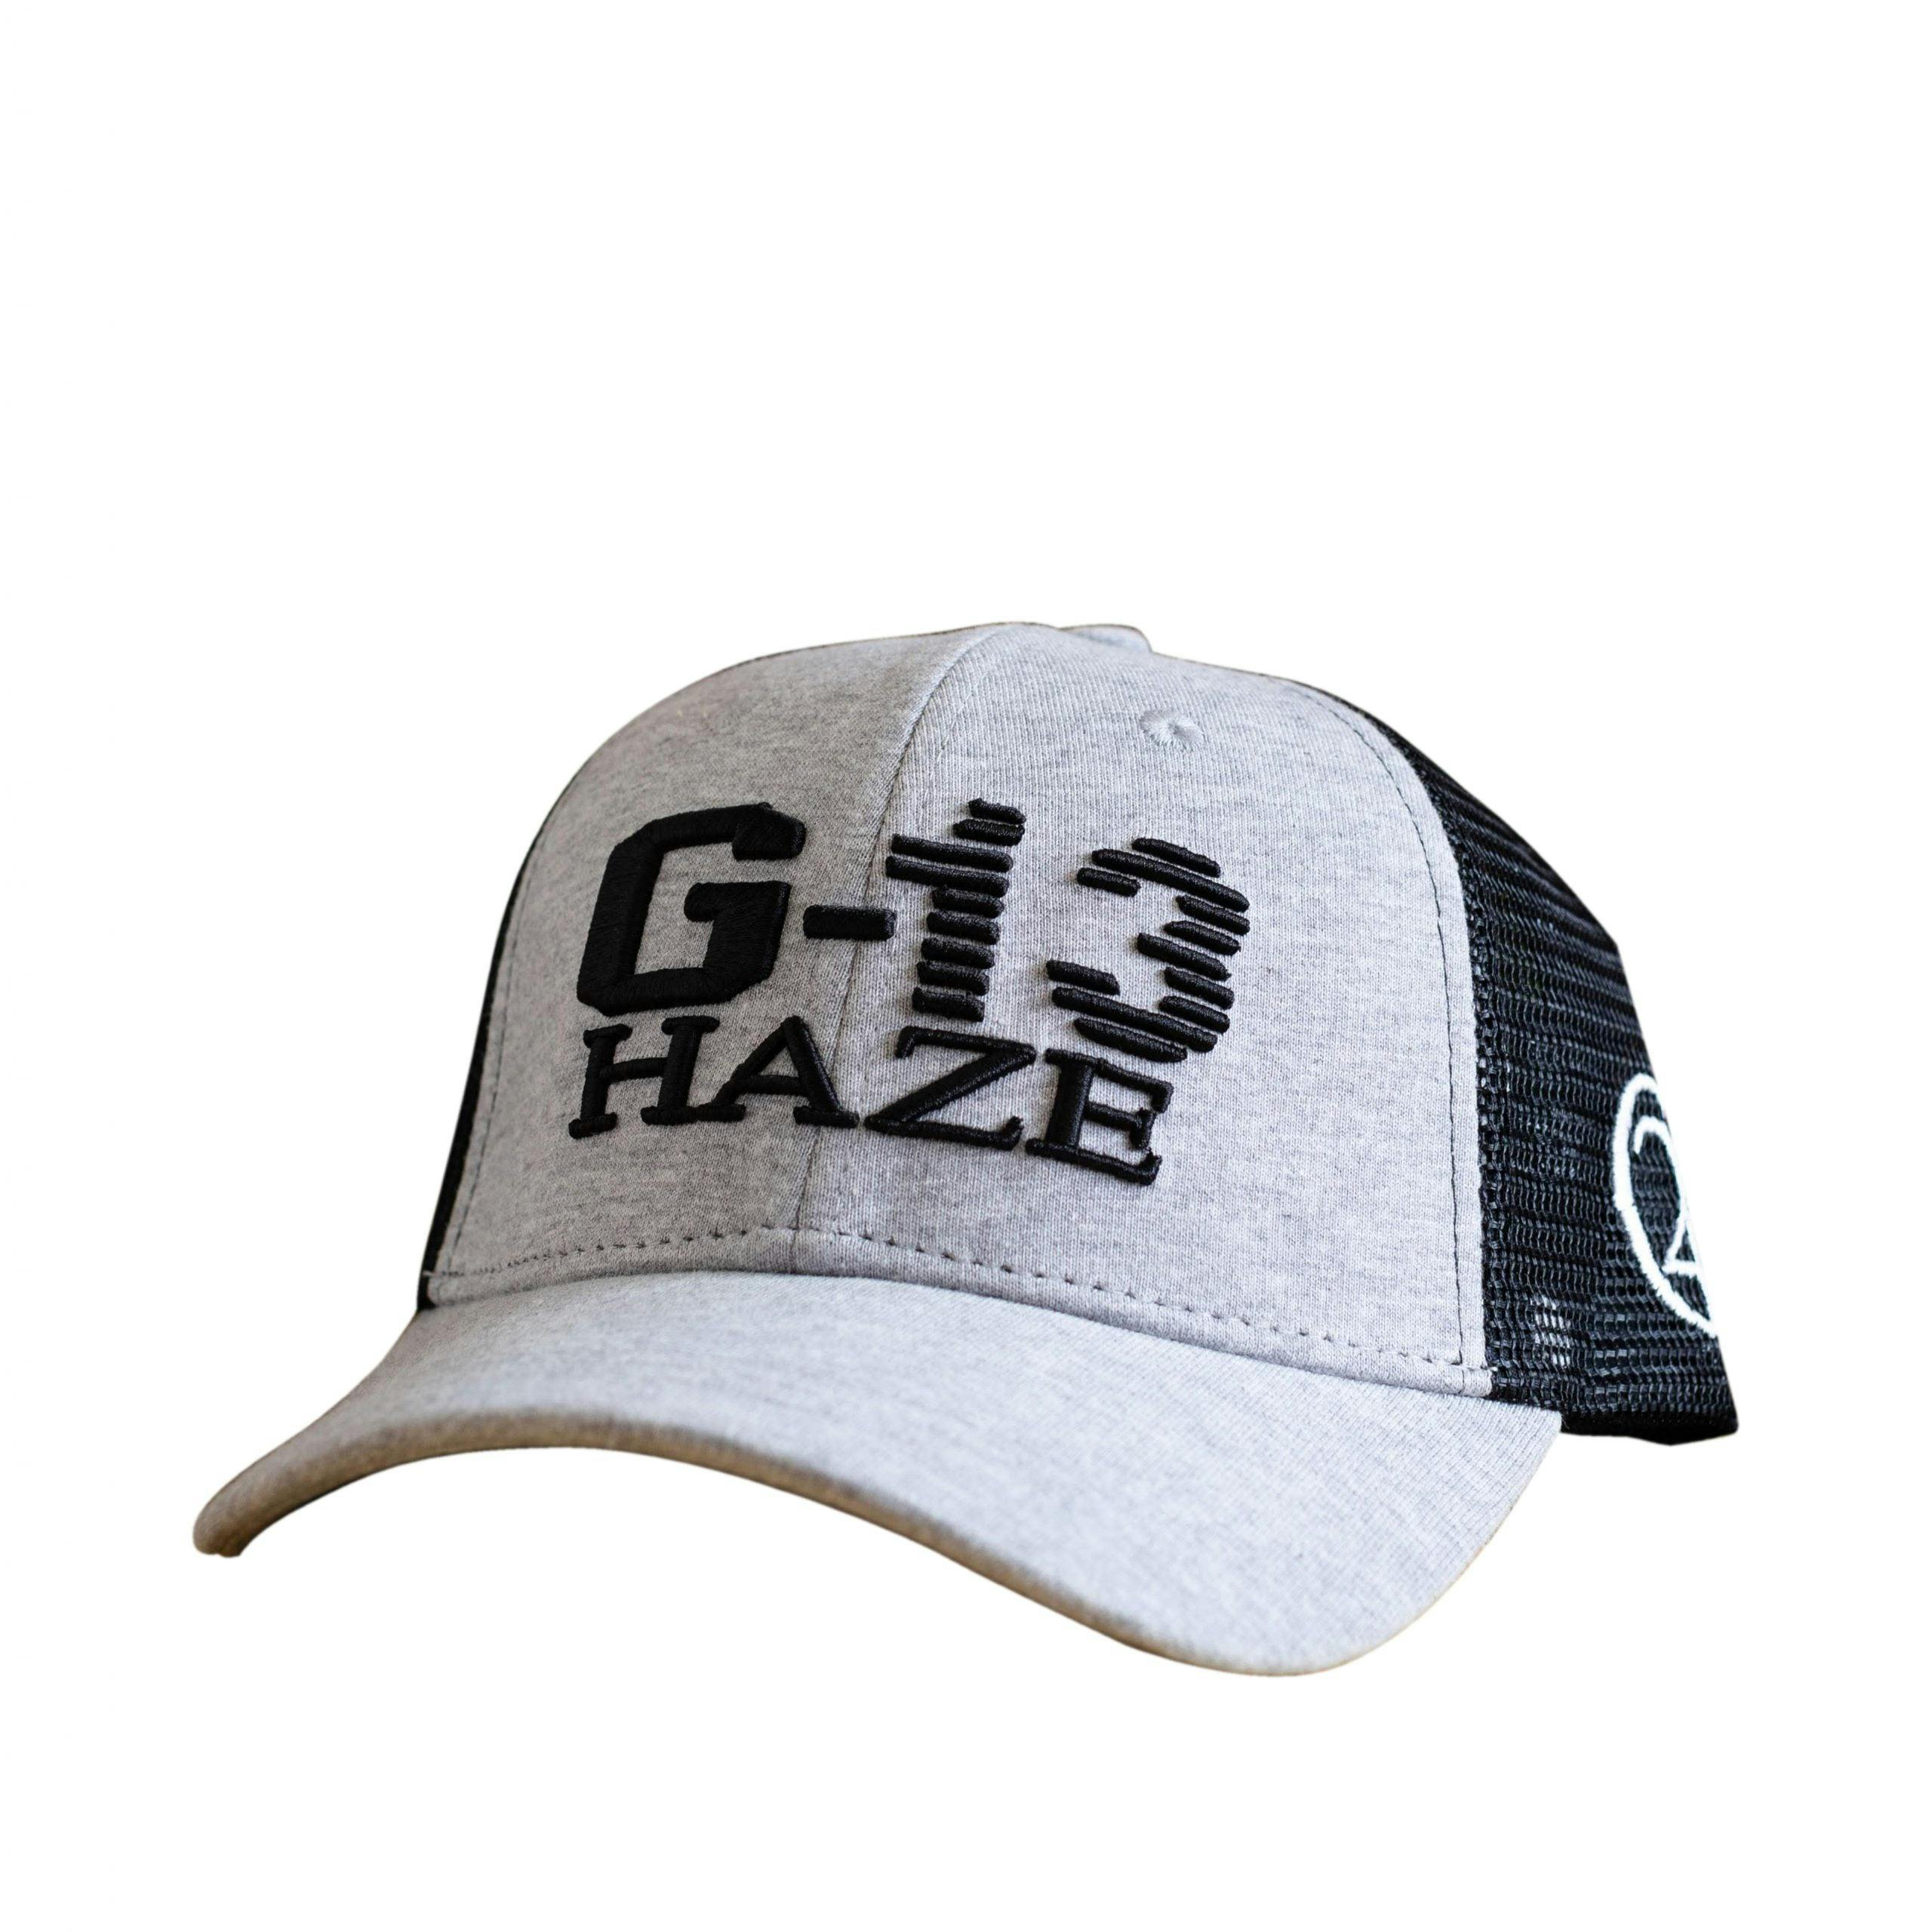 G-13 Haze Cap